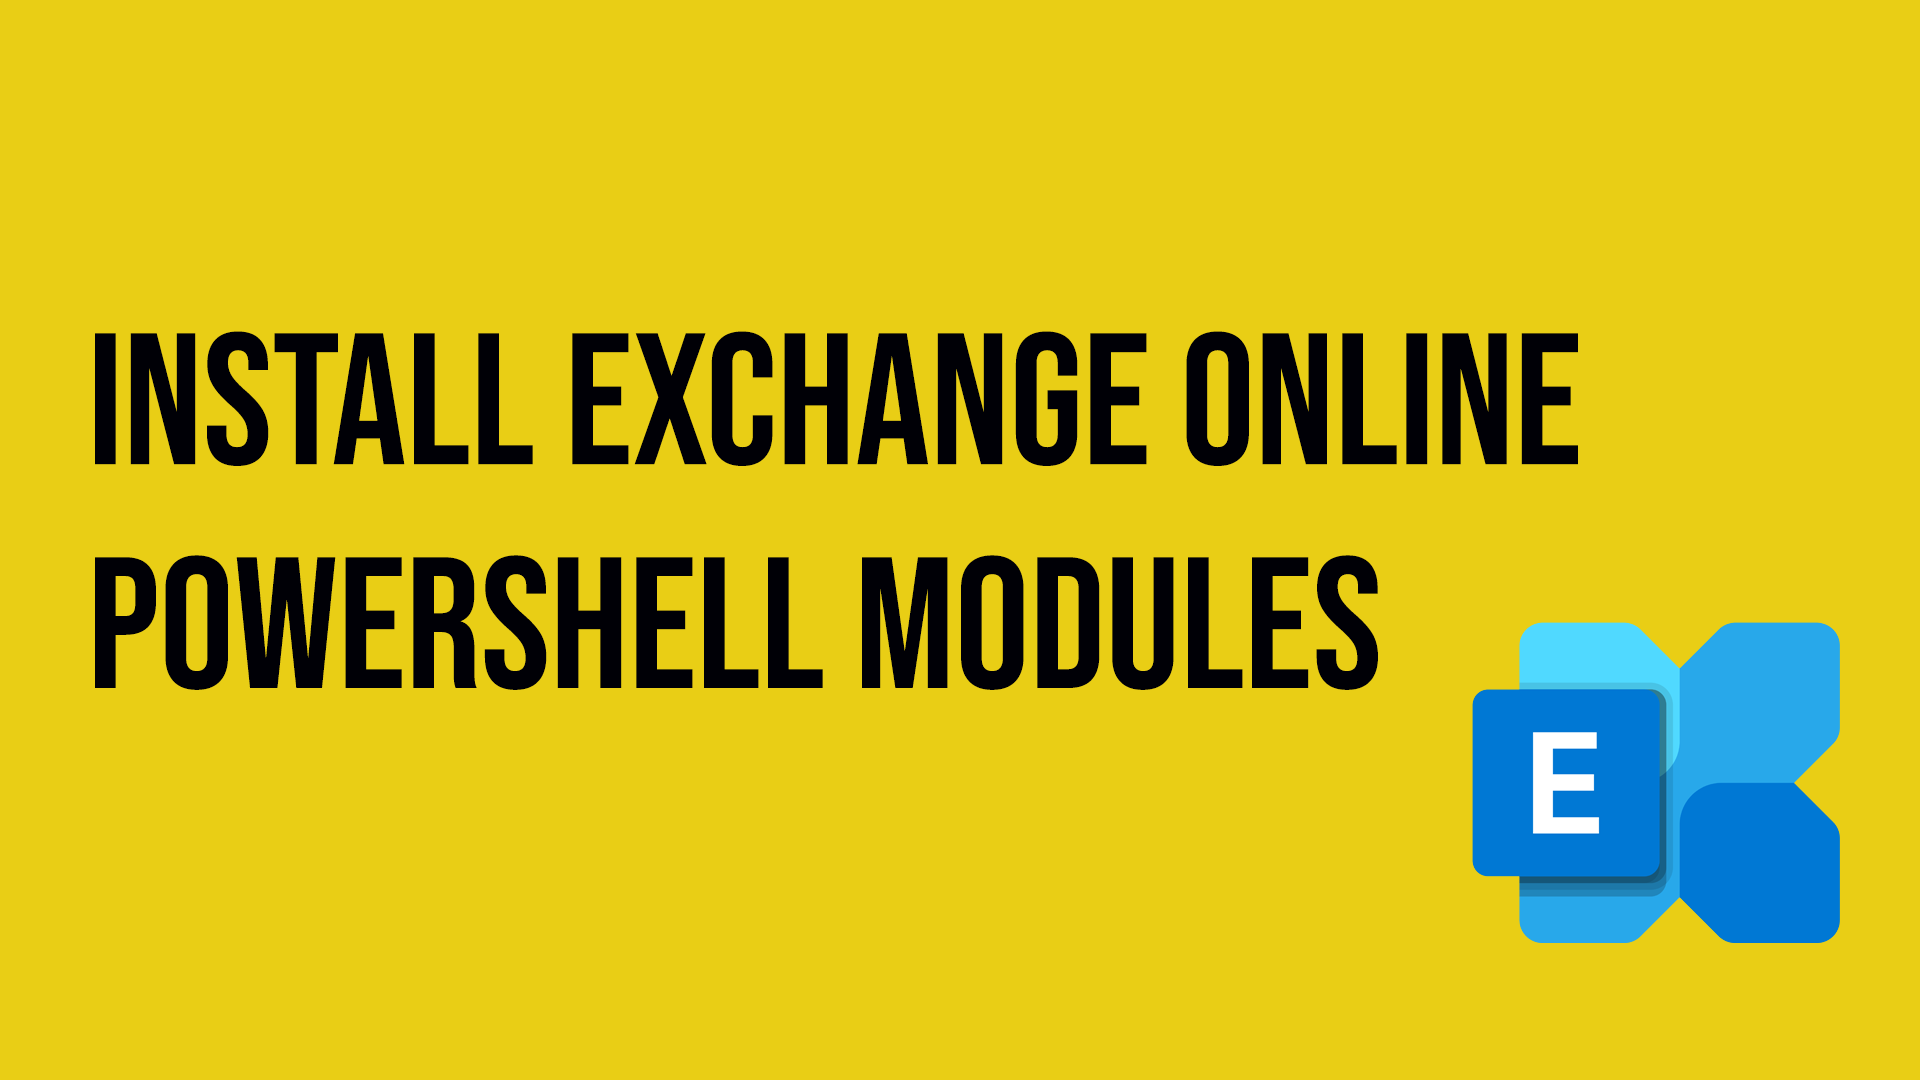 install module exchange online powershell